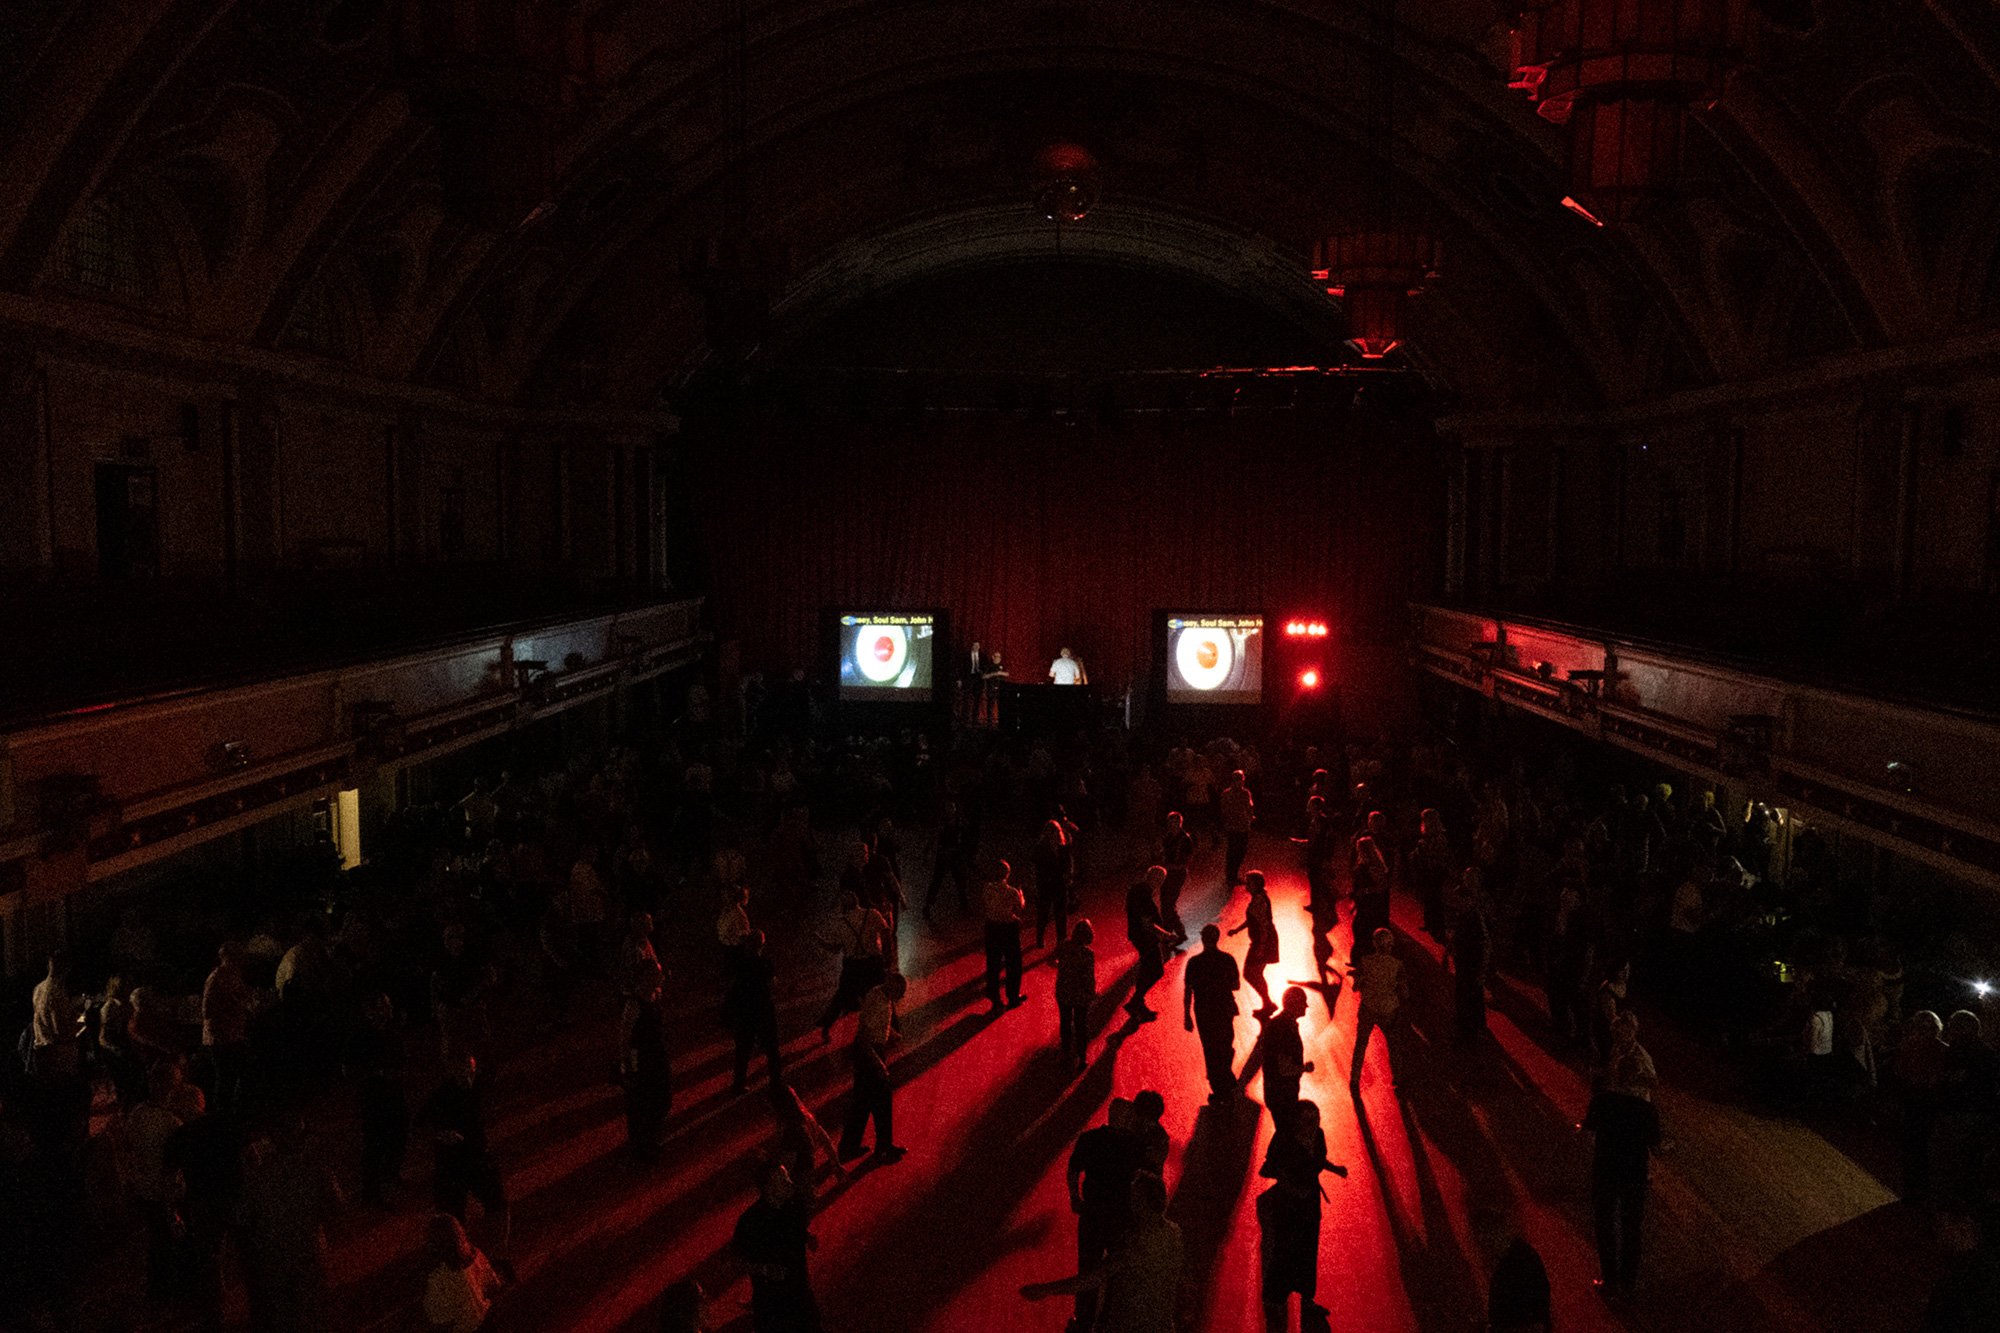 In a darkened room, red light illuminates dozens of people dancing.